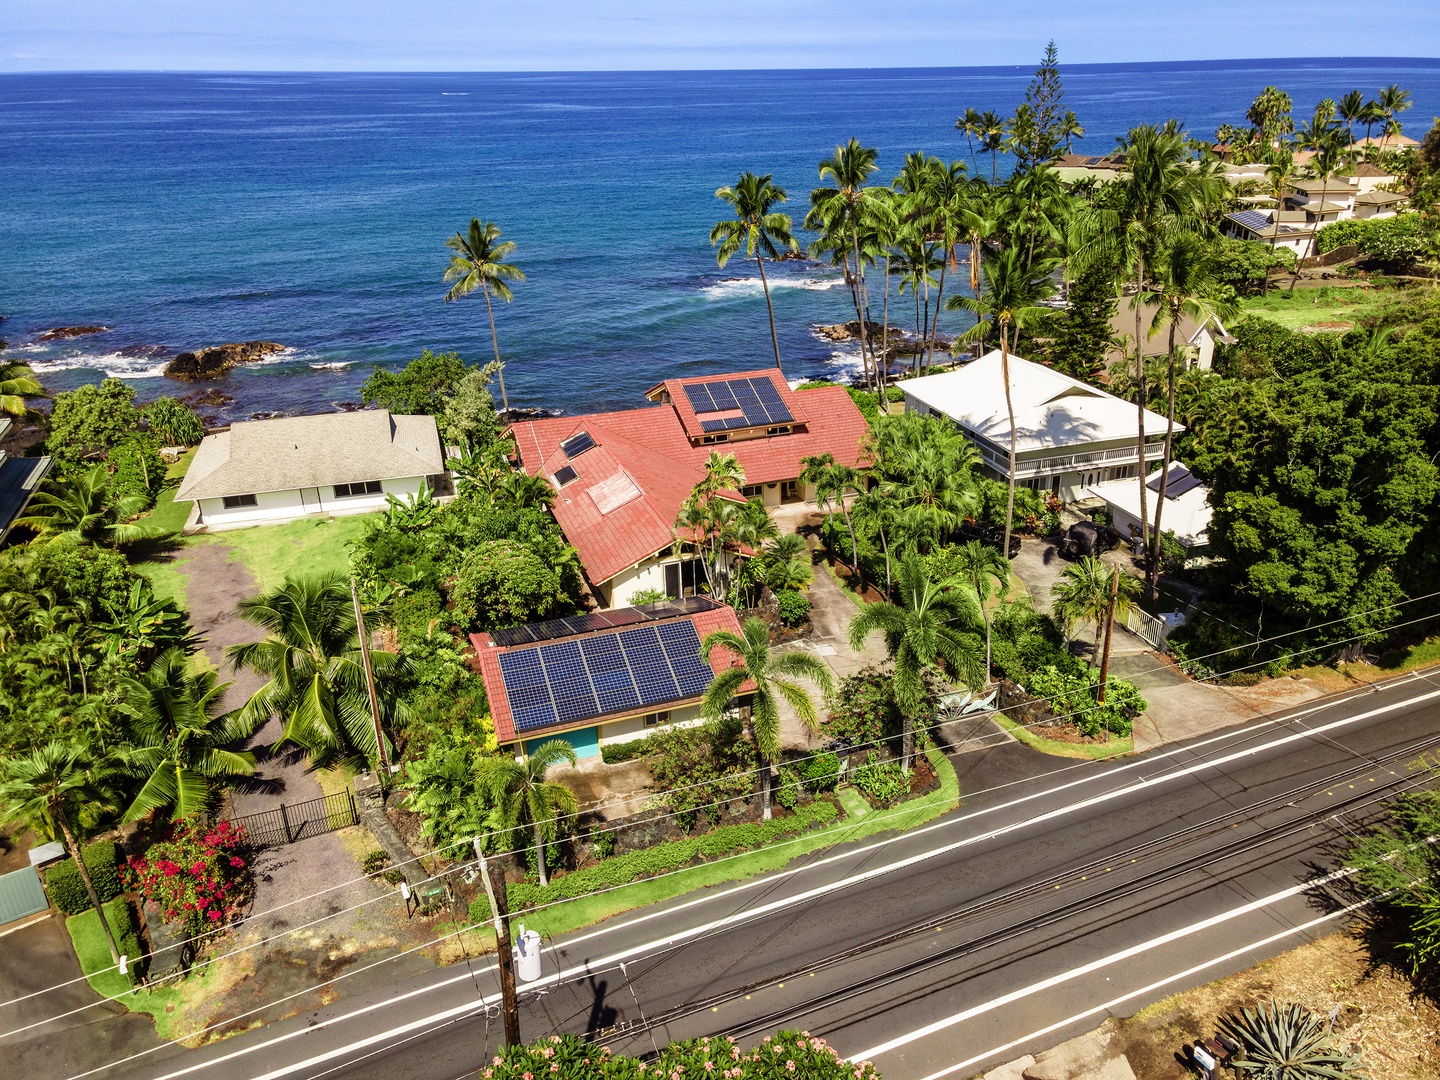 Kailua Kona Vacation Rentals, Hale Pua - Aerial views of the homes surroundings